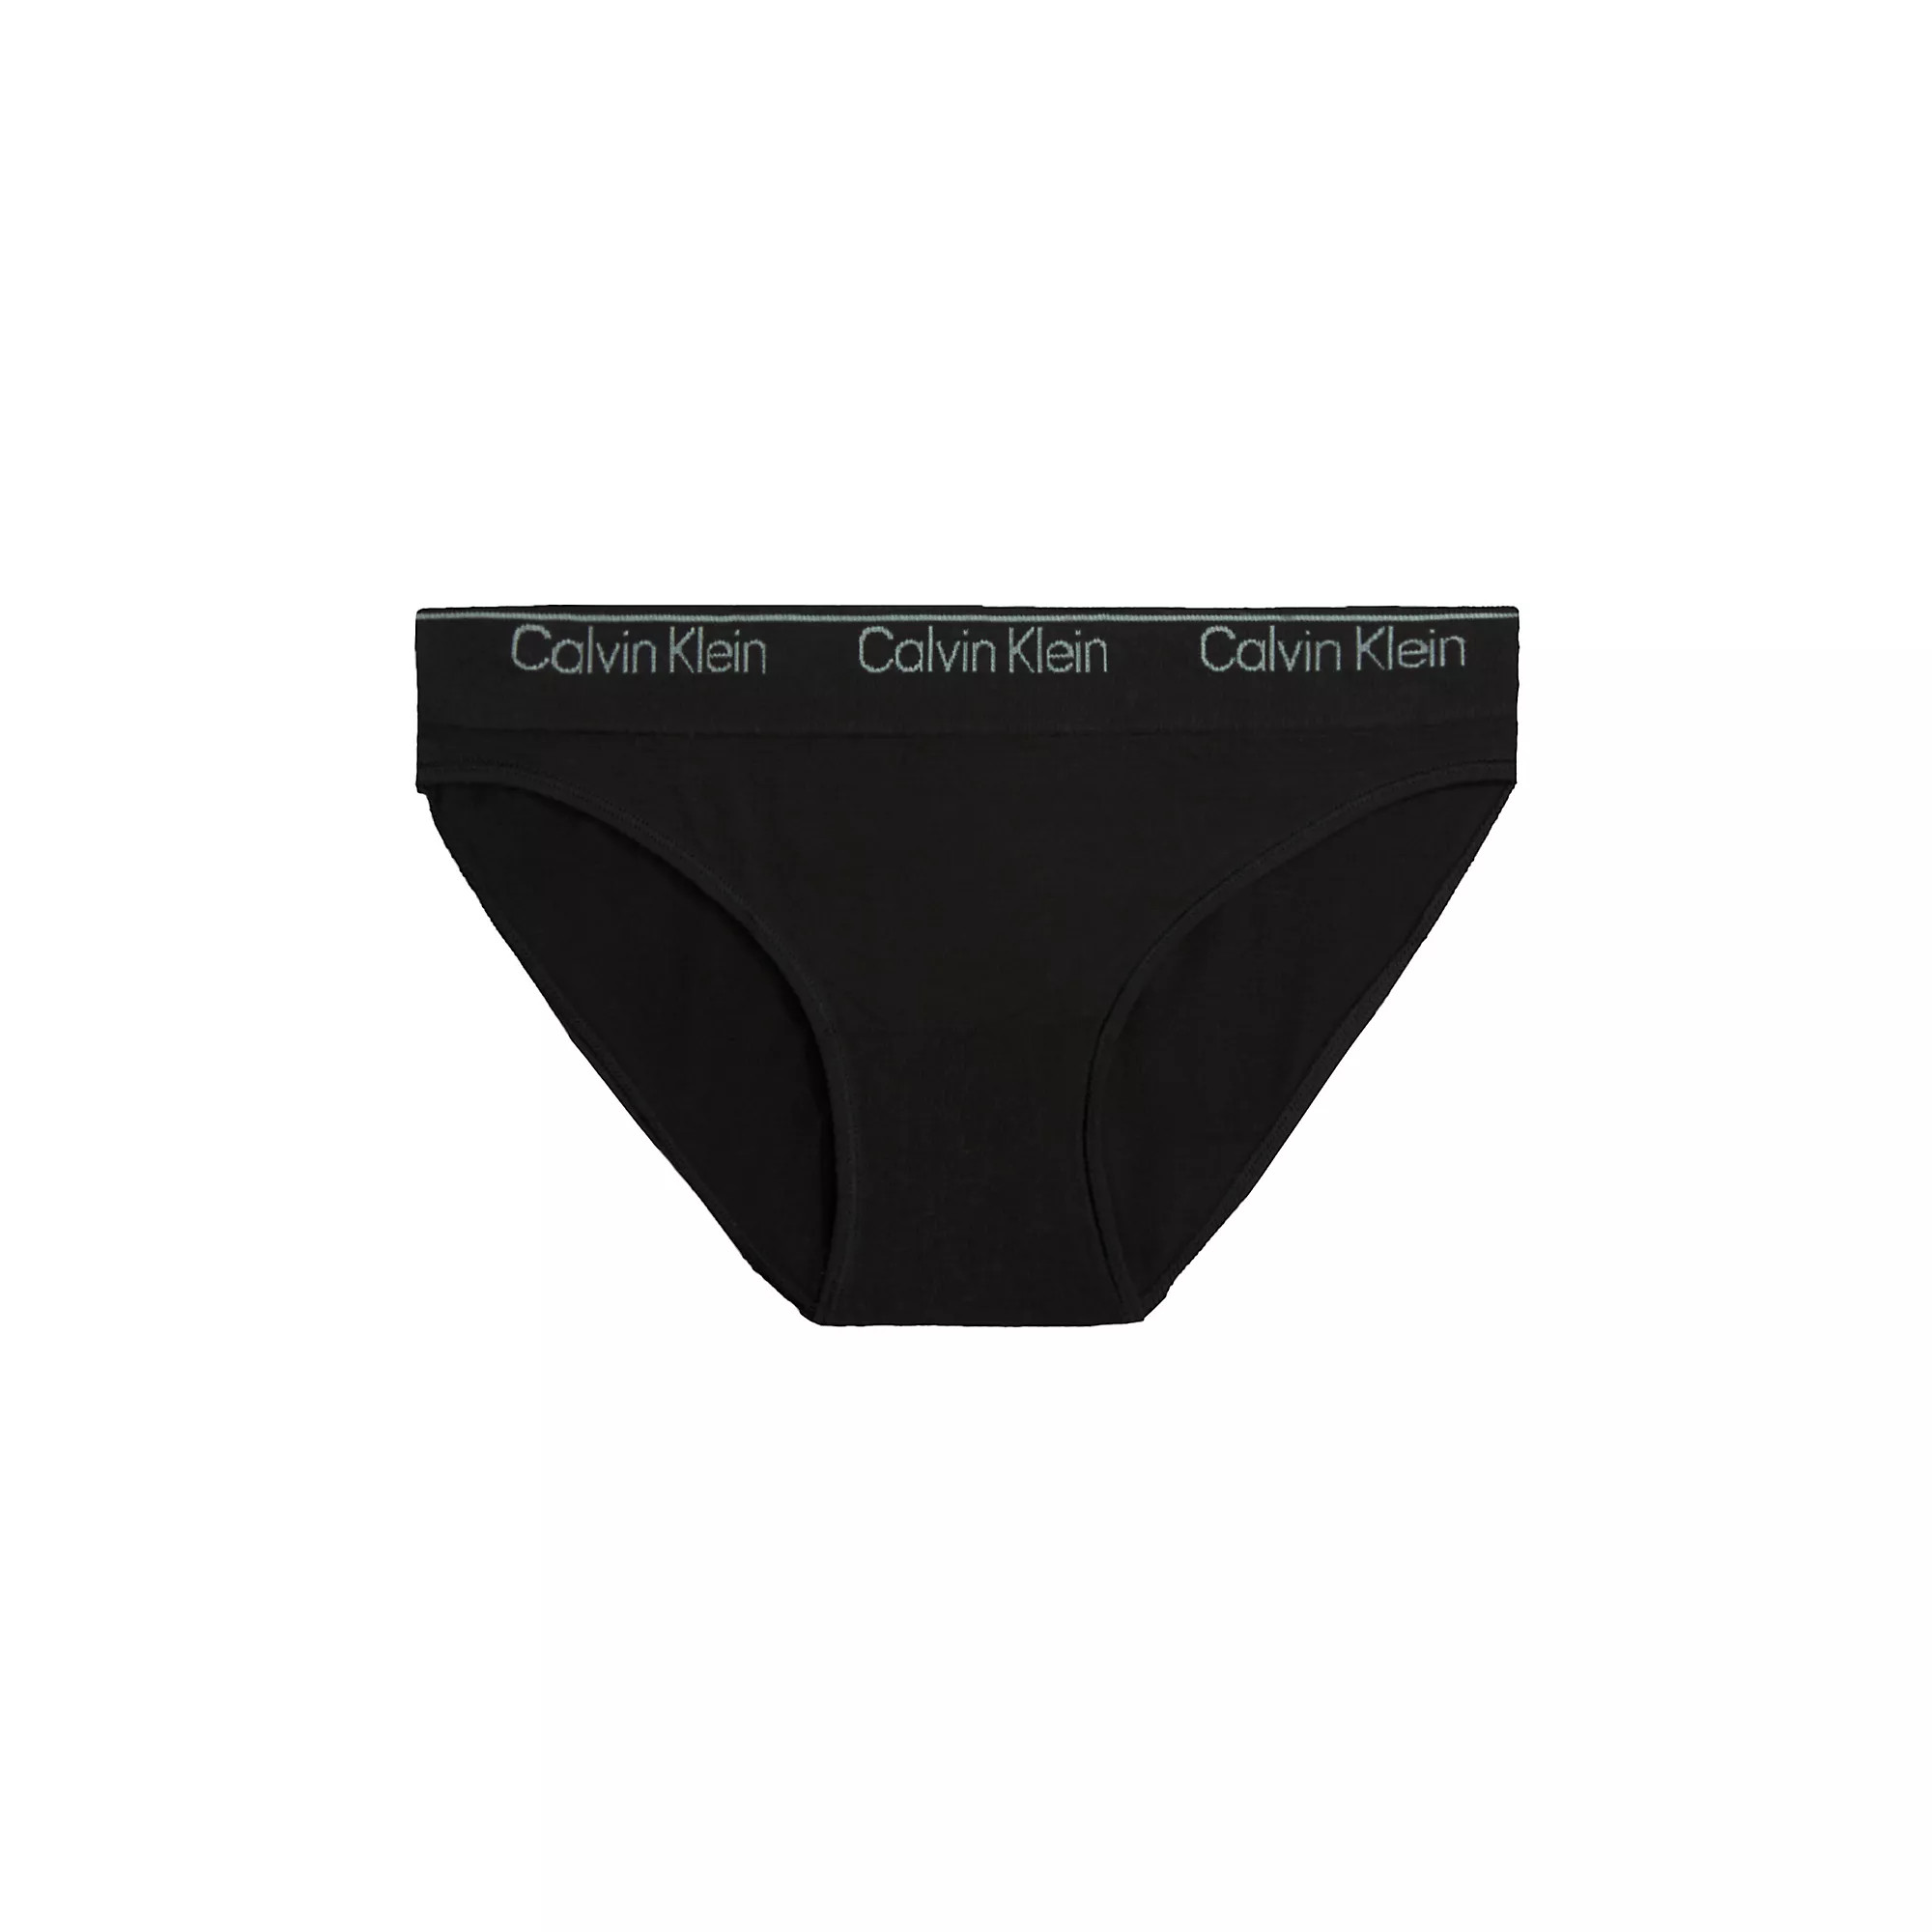 Spodní prádlo Dámské kalhotky BIKINI 000QF7096EUB1 - Calvin Klein XL